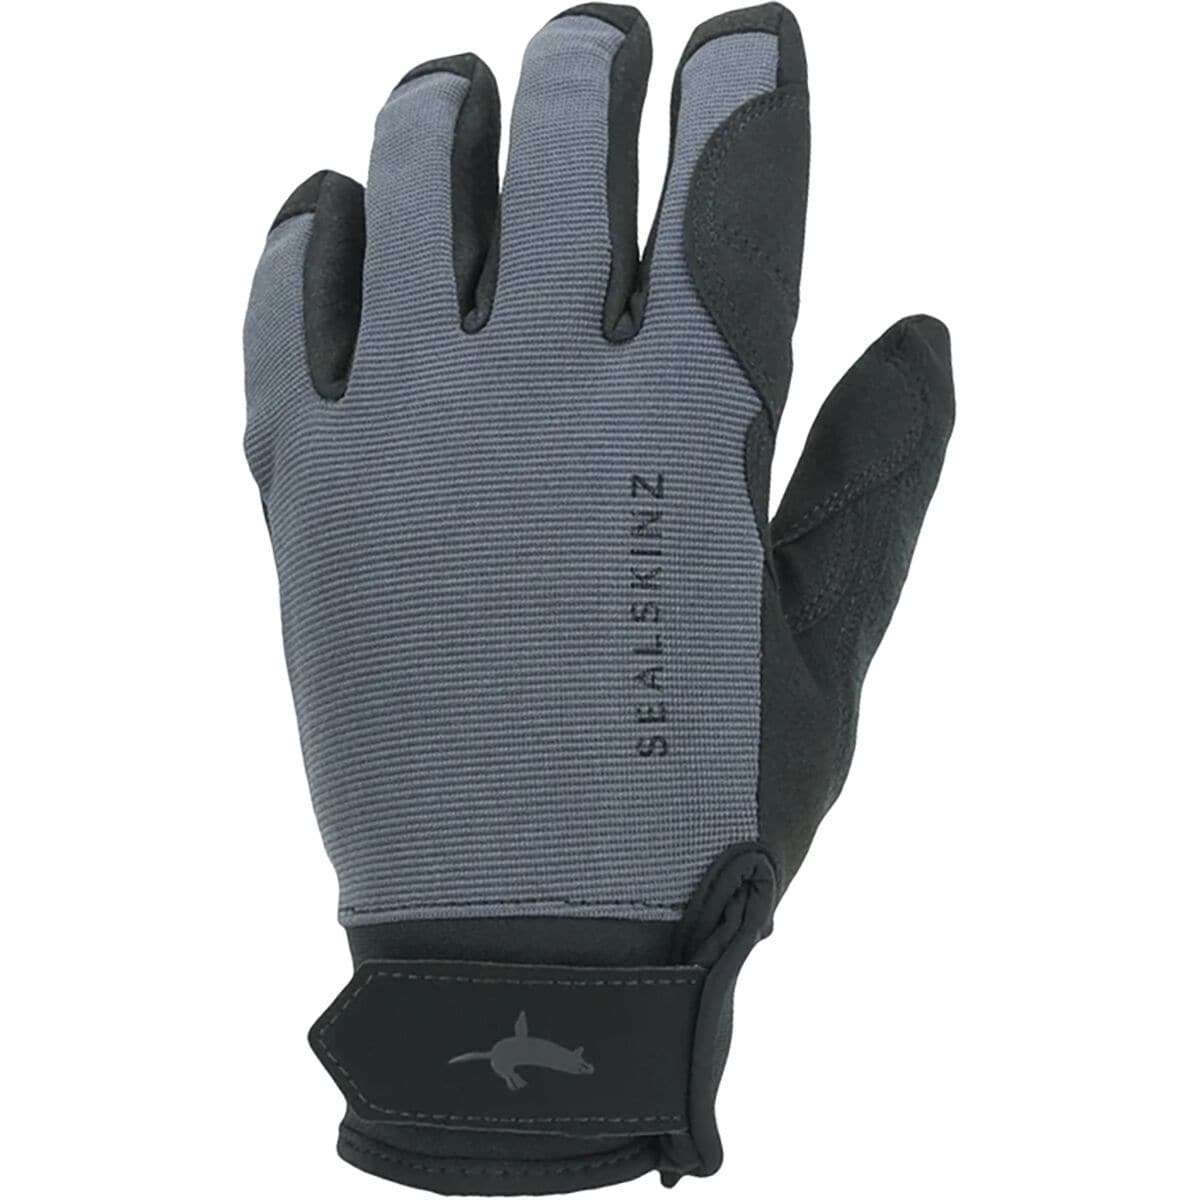 SealSkinz Sutton Waterproof All Weather MTB Glove - Men's